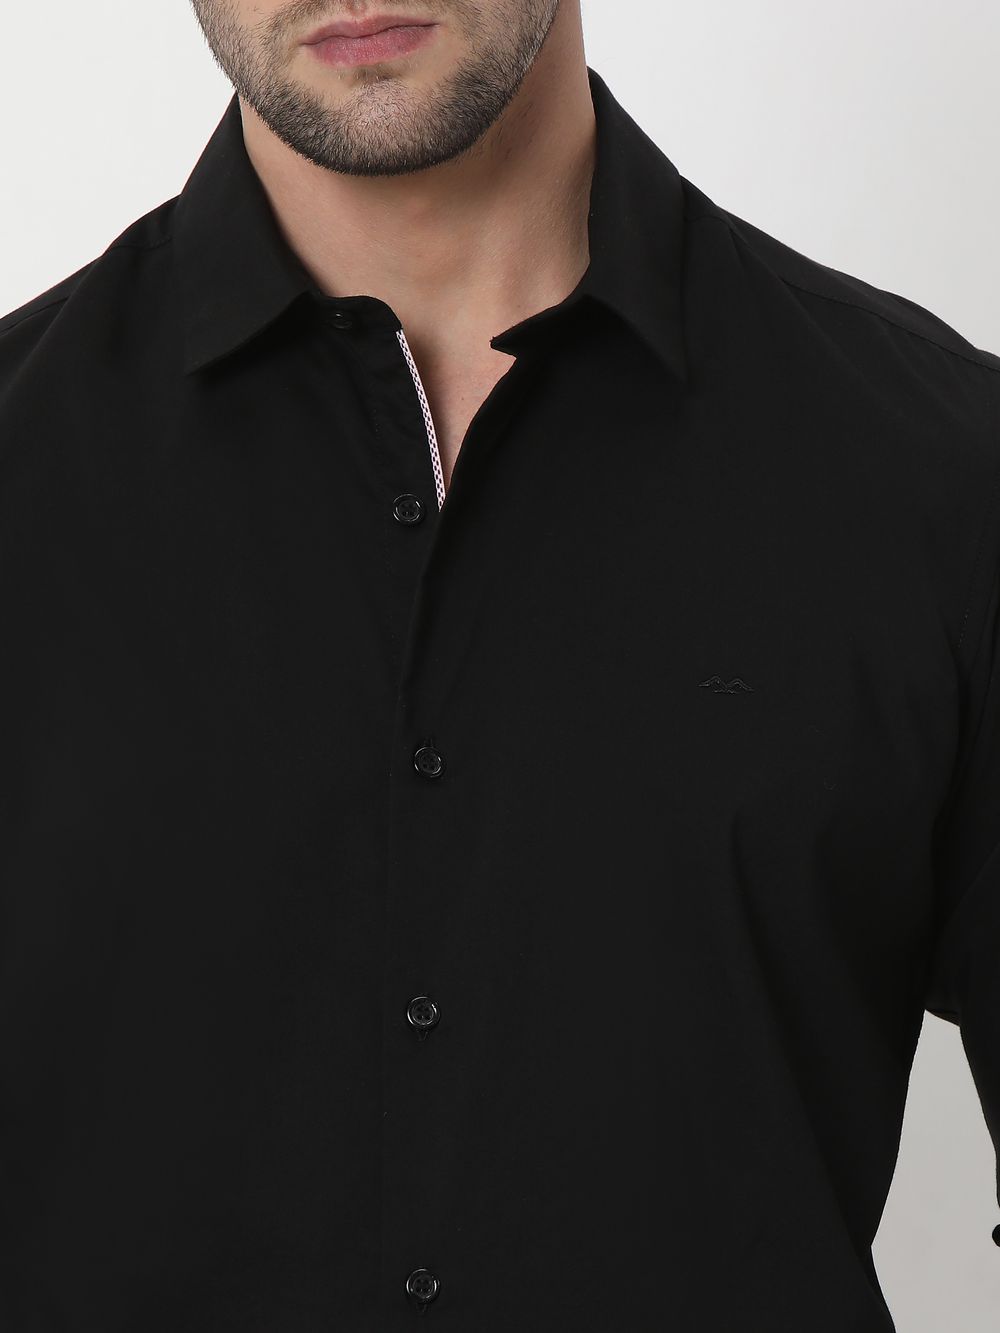 Black Stretch Plain Slim Fit Casual Shirt